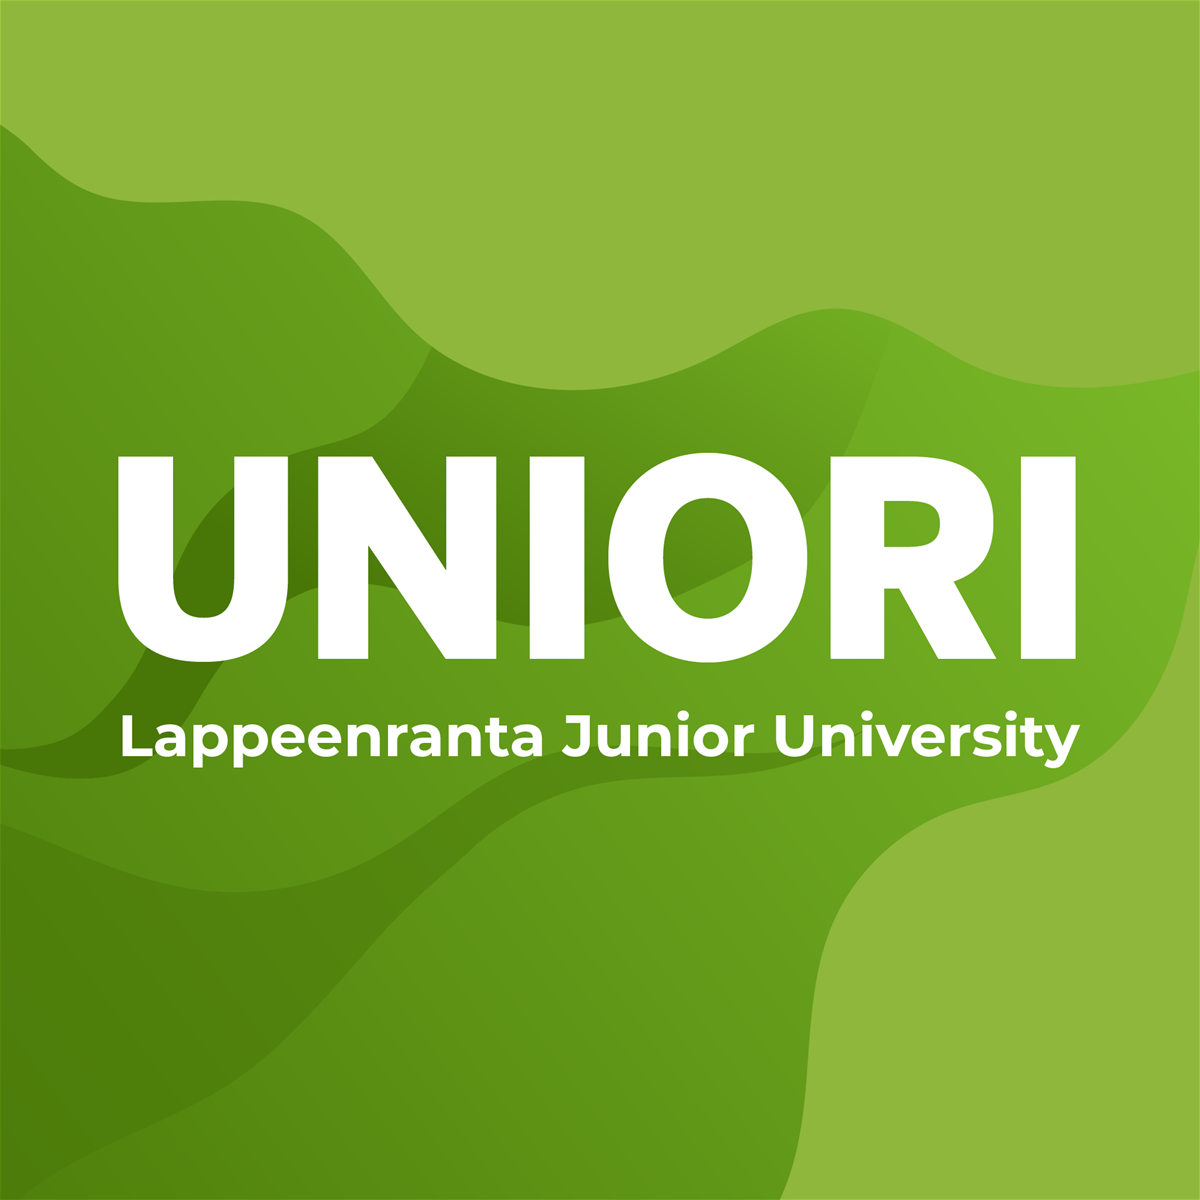 Uniorin eli Lappeenranta Junior Universityn logo.